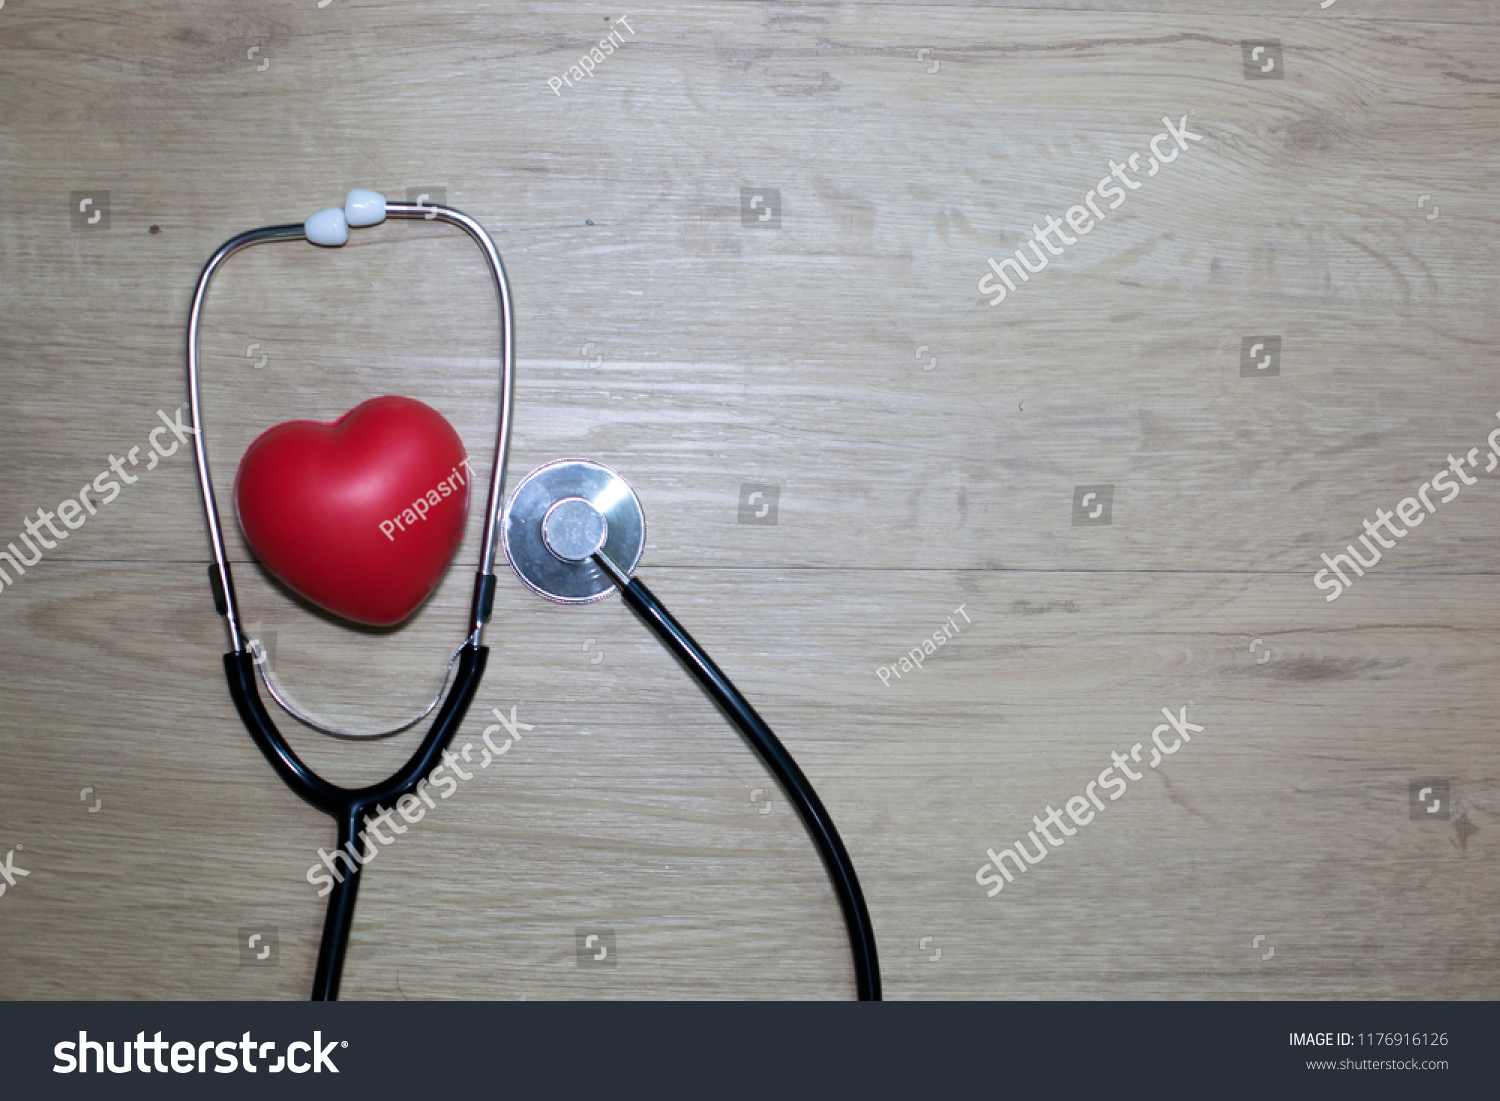 Powerful Assumption Skyscraper Stethoscope Represents Health Red Heart Representation Stock Photo  1176916126 | Shutterstock